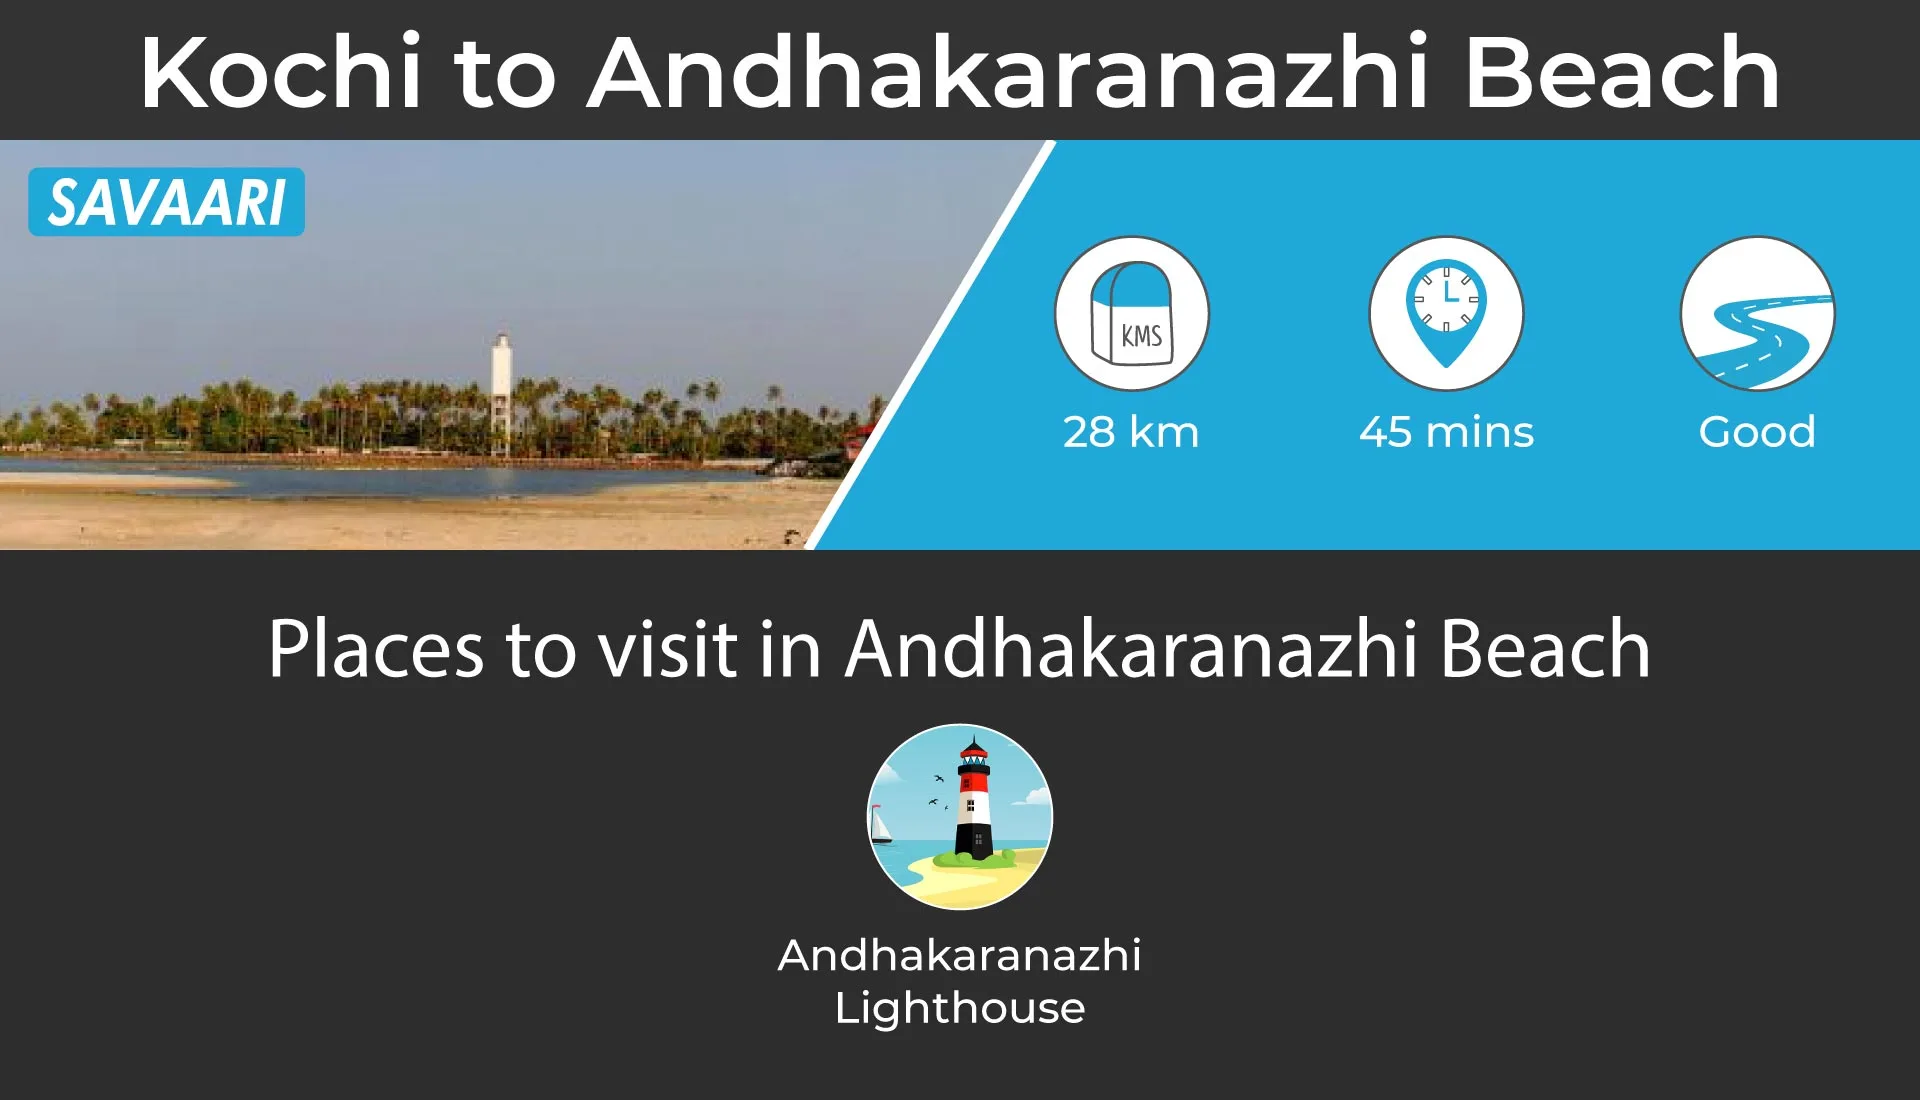 Kochi to Andhakaranazhi Beach road trip